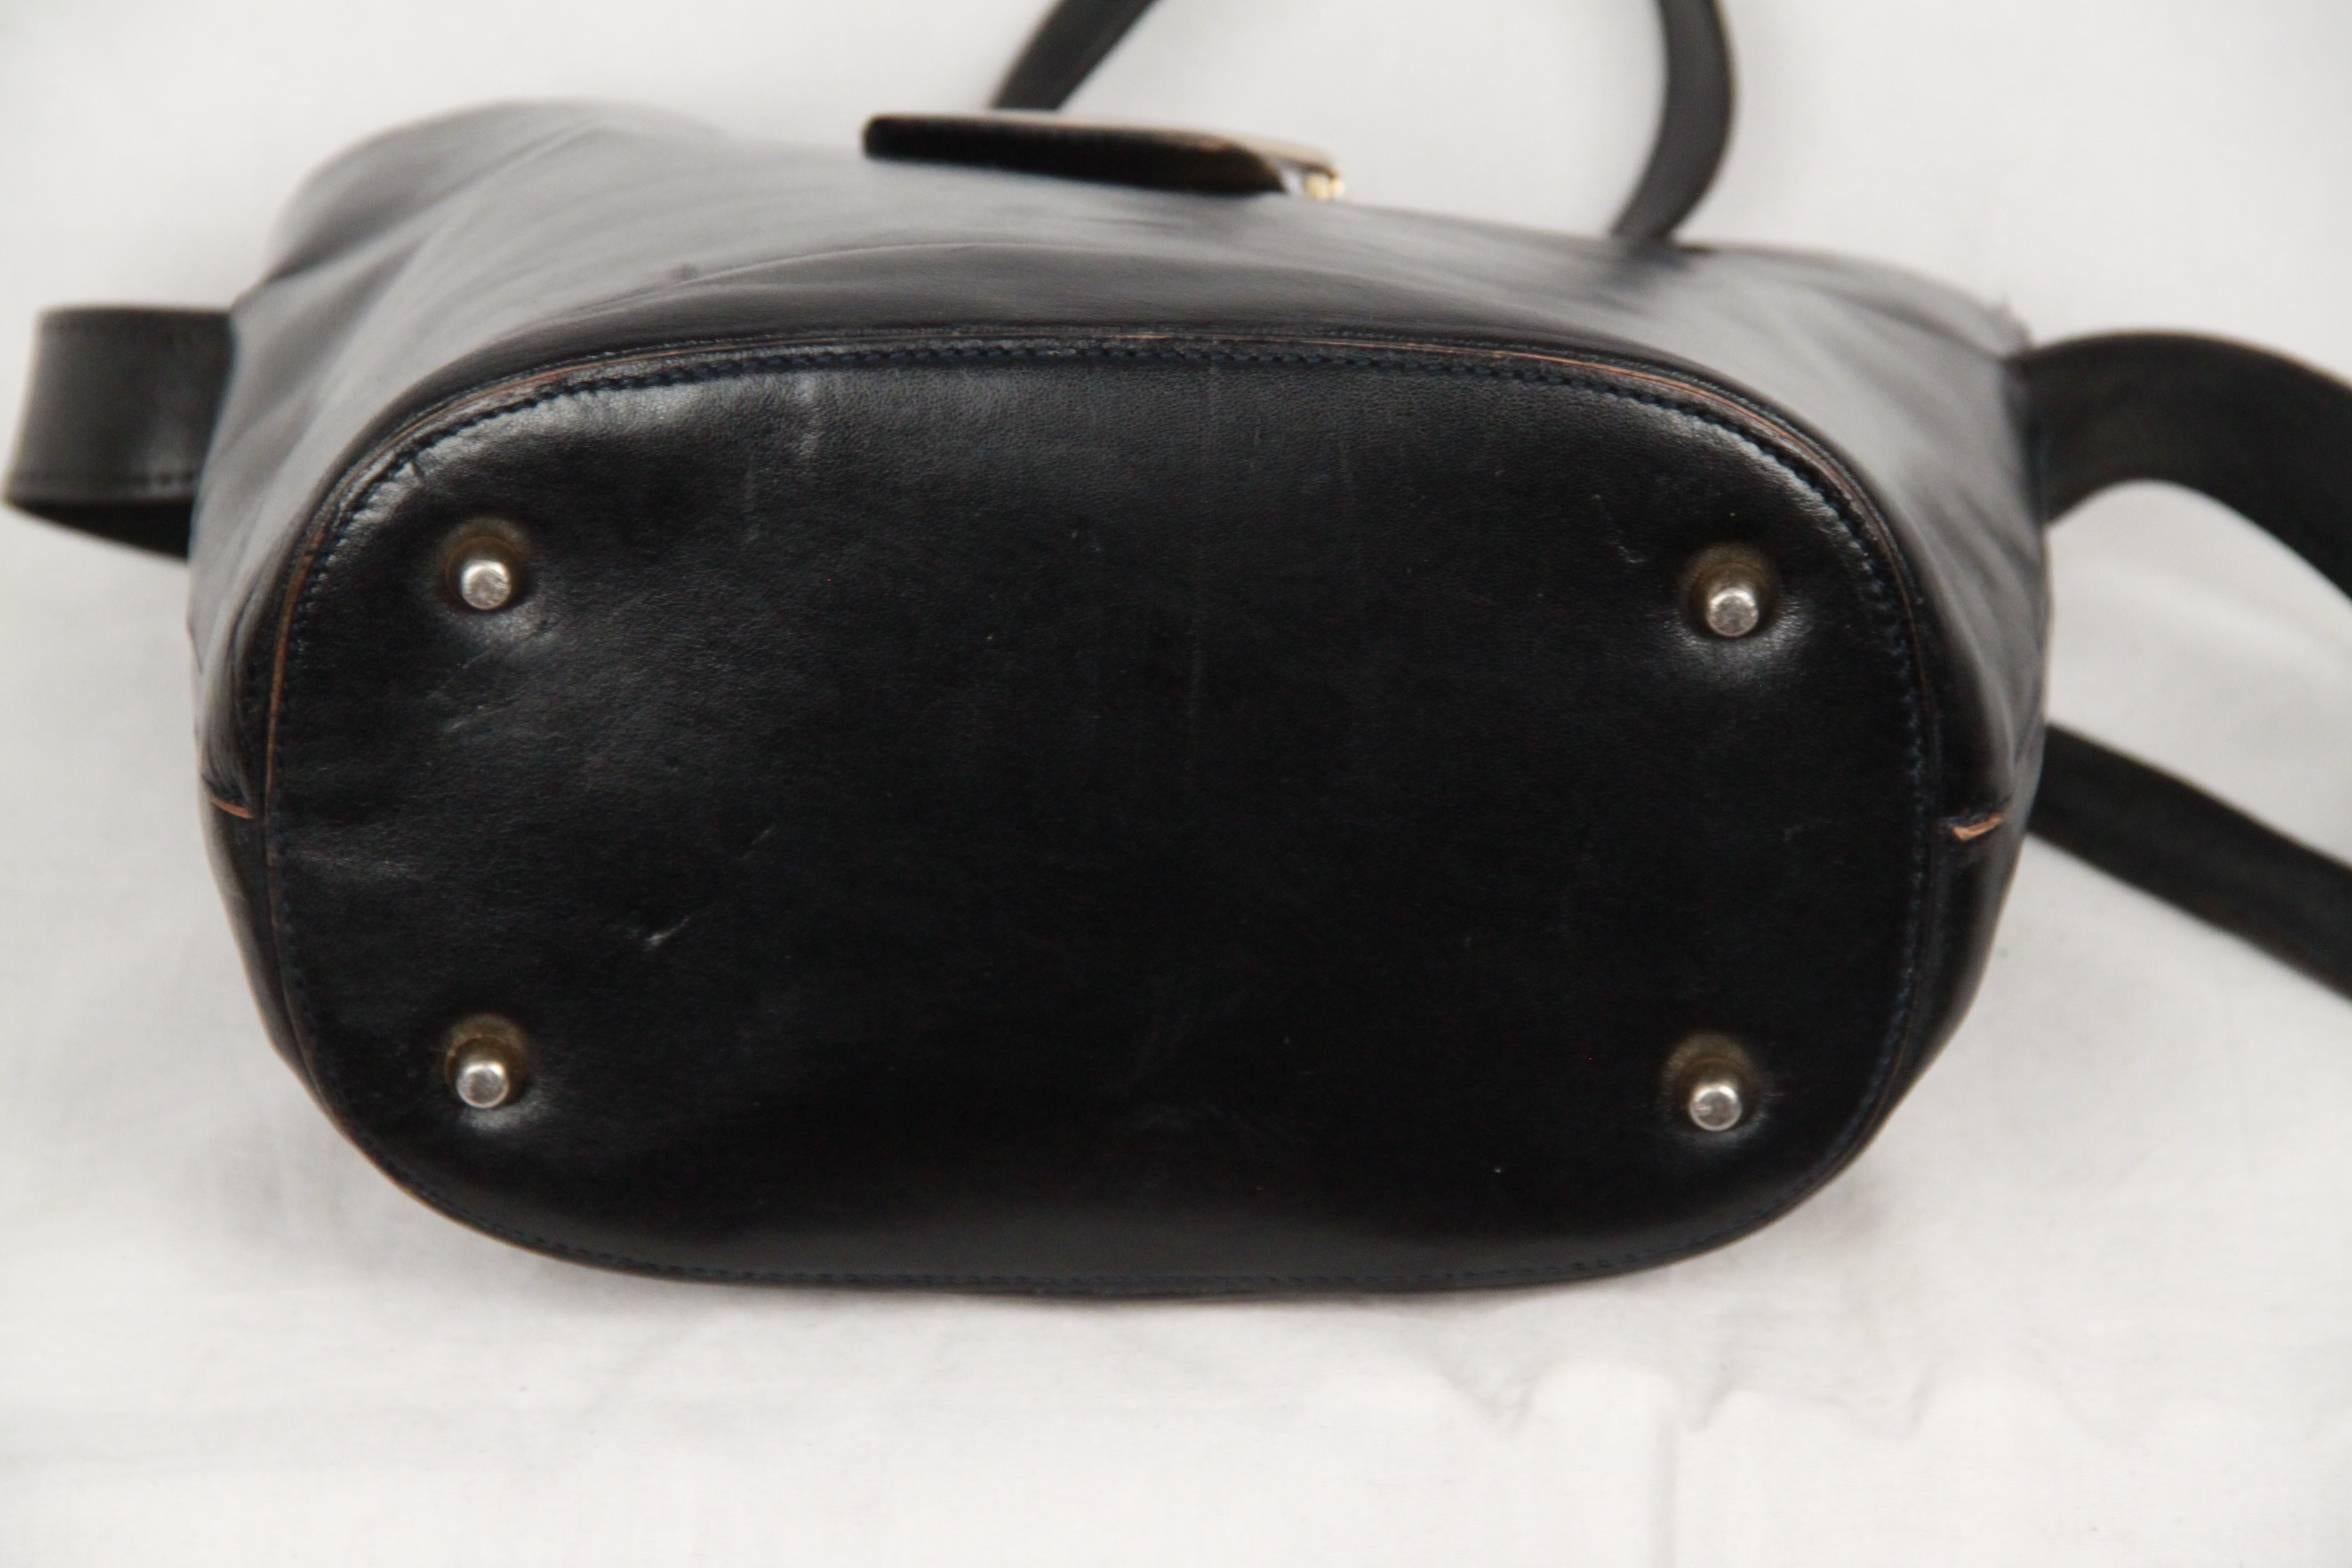 vintage black leather prada bag